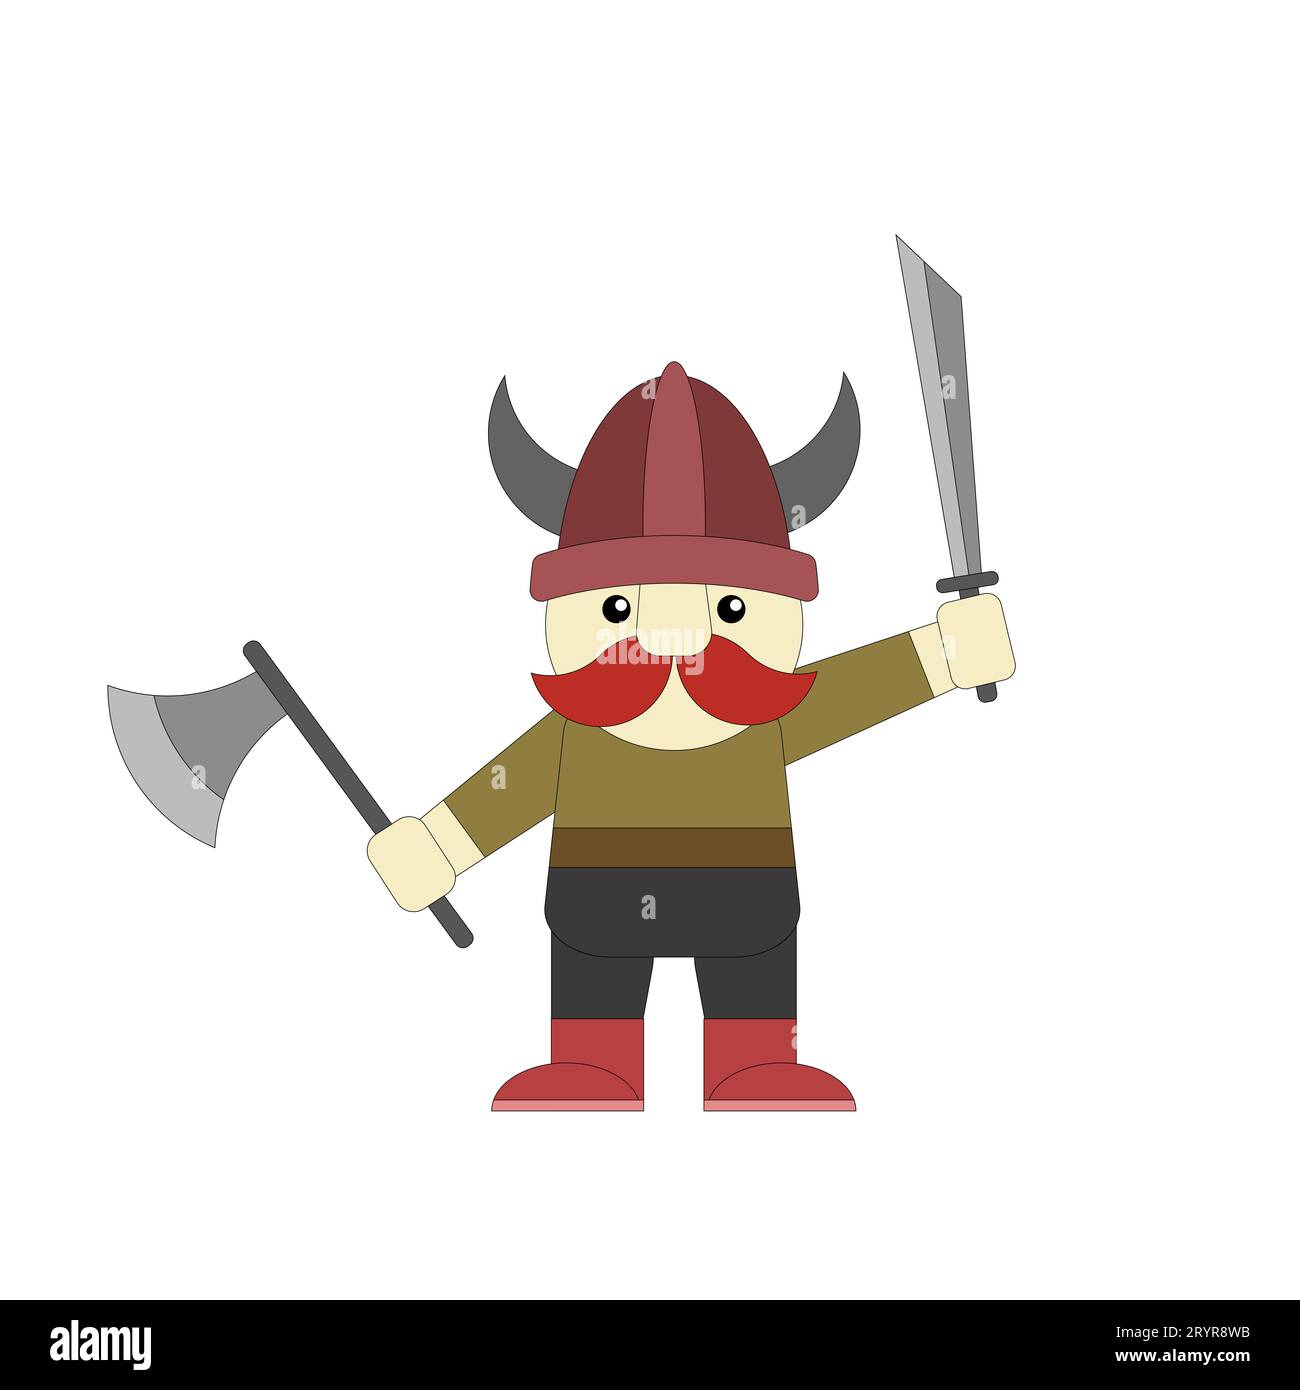 Funny little Viking warrior character illustration on white background Stock Photo